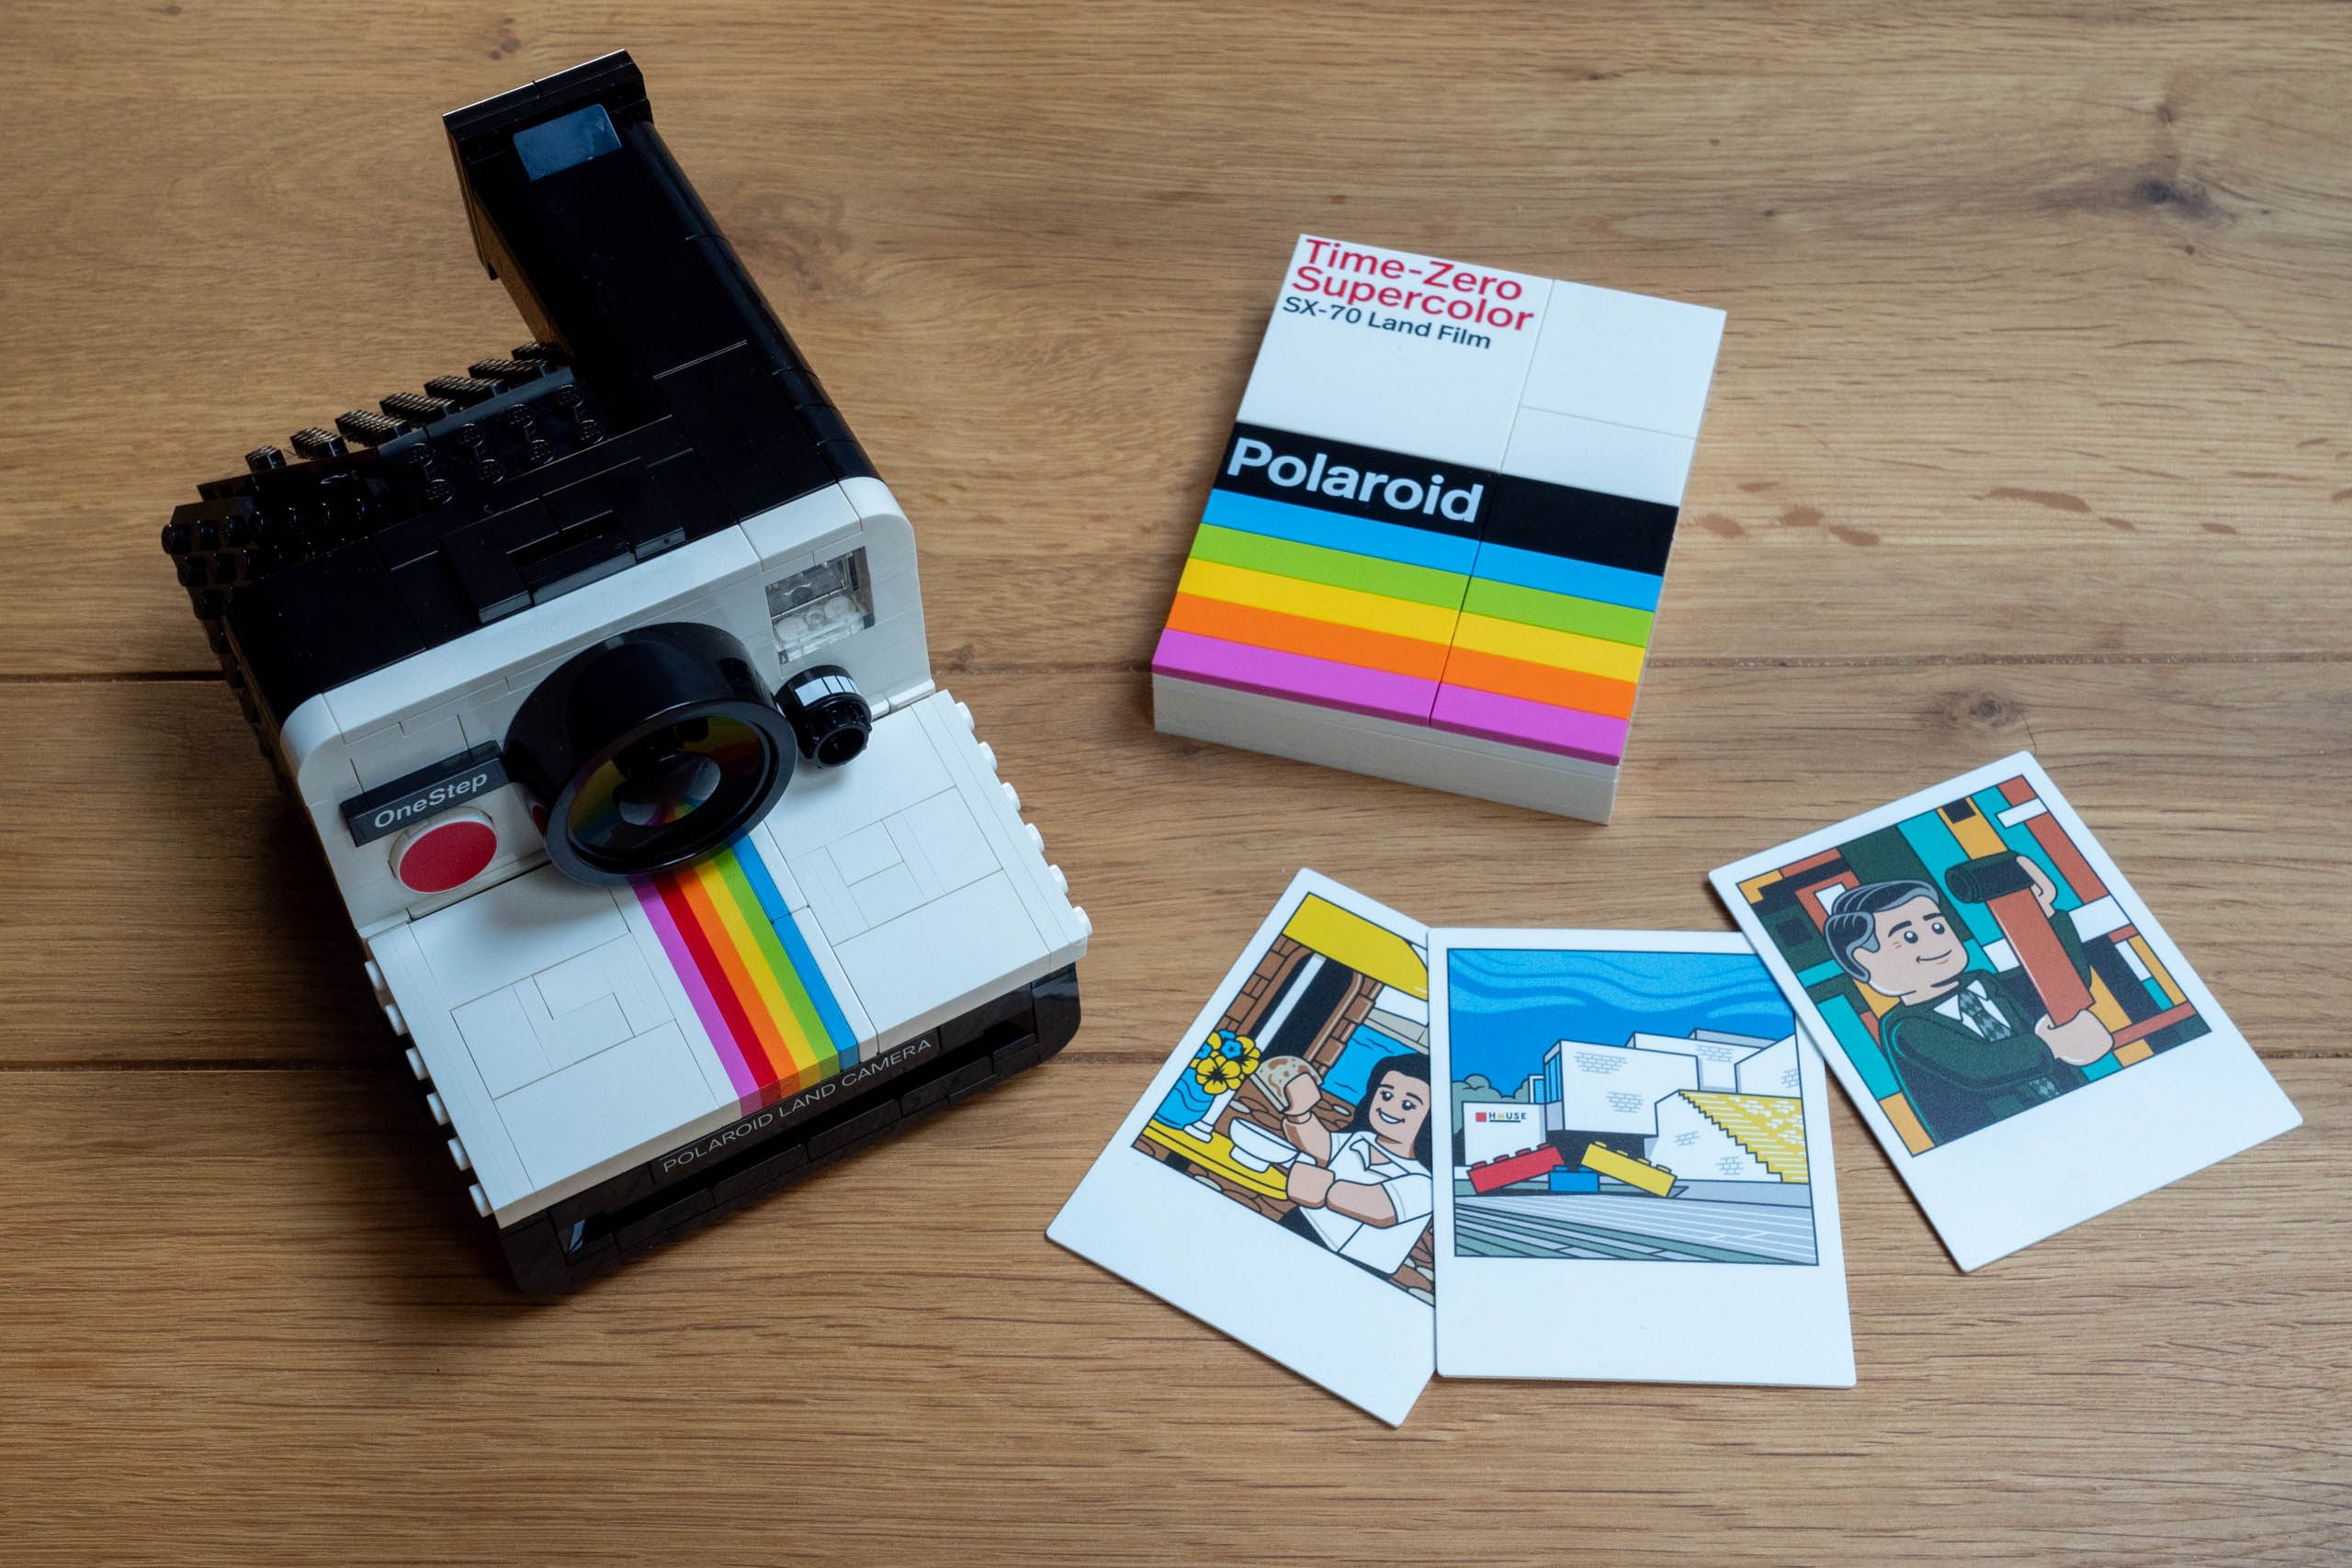 Lights, Camera, Build the New LEGO Ideas Polaroid OneStep SX-70